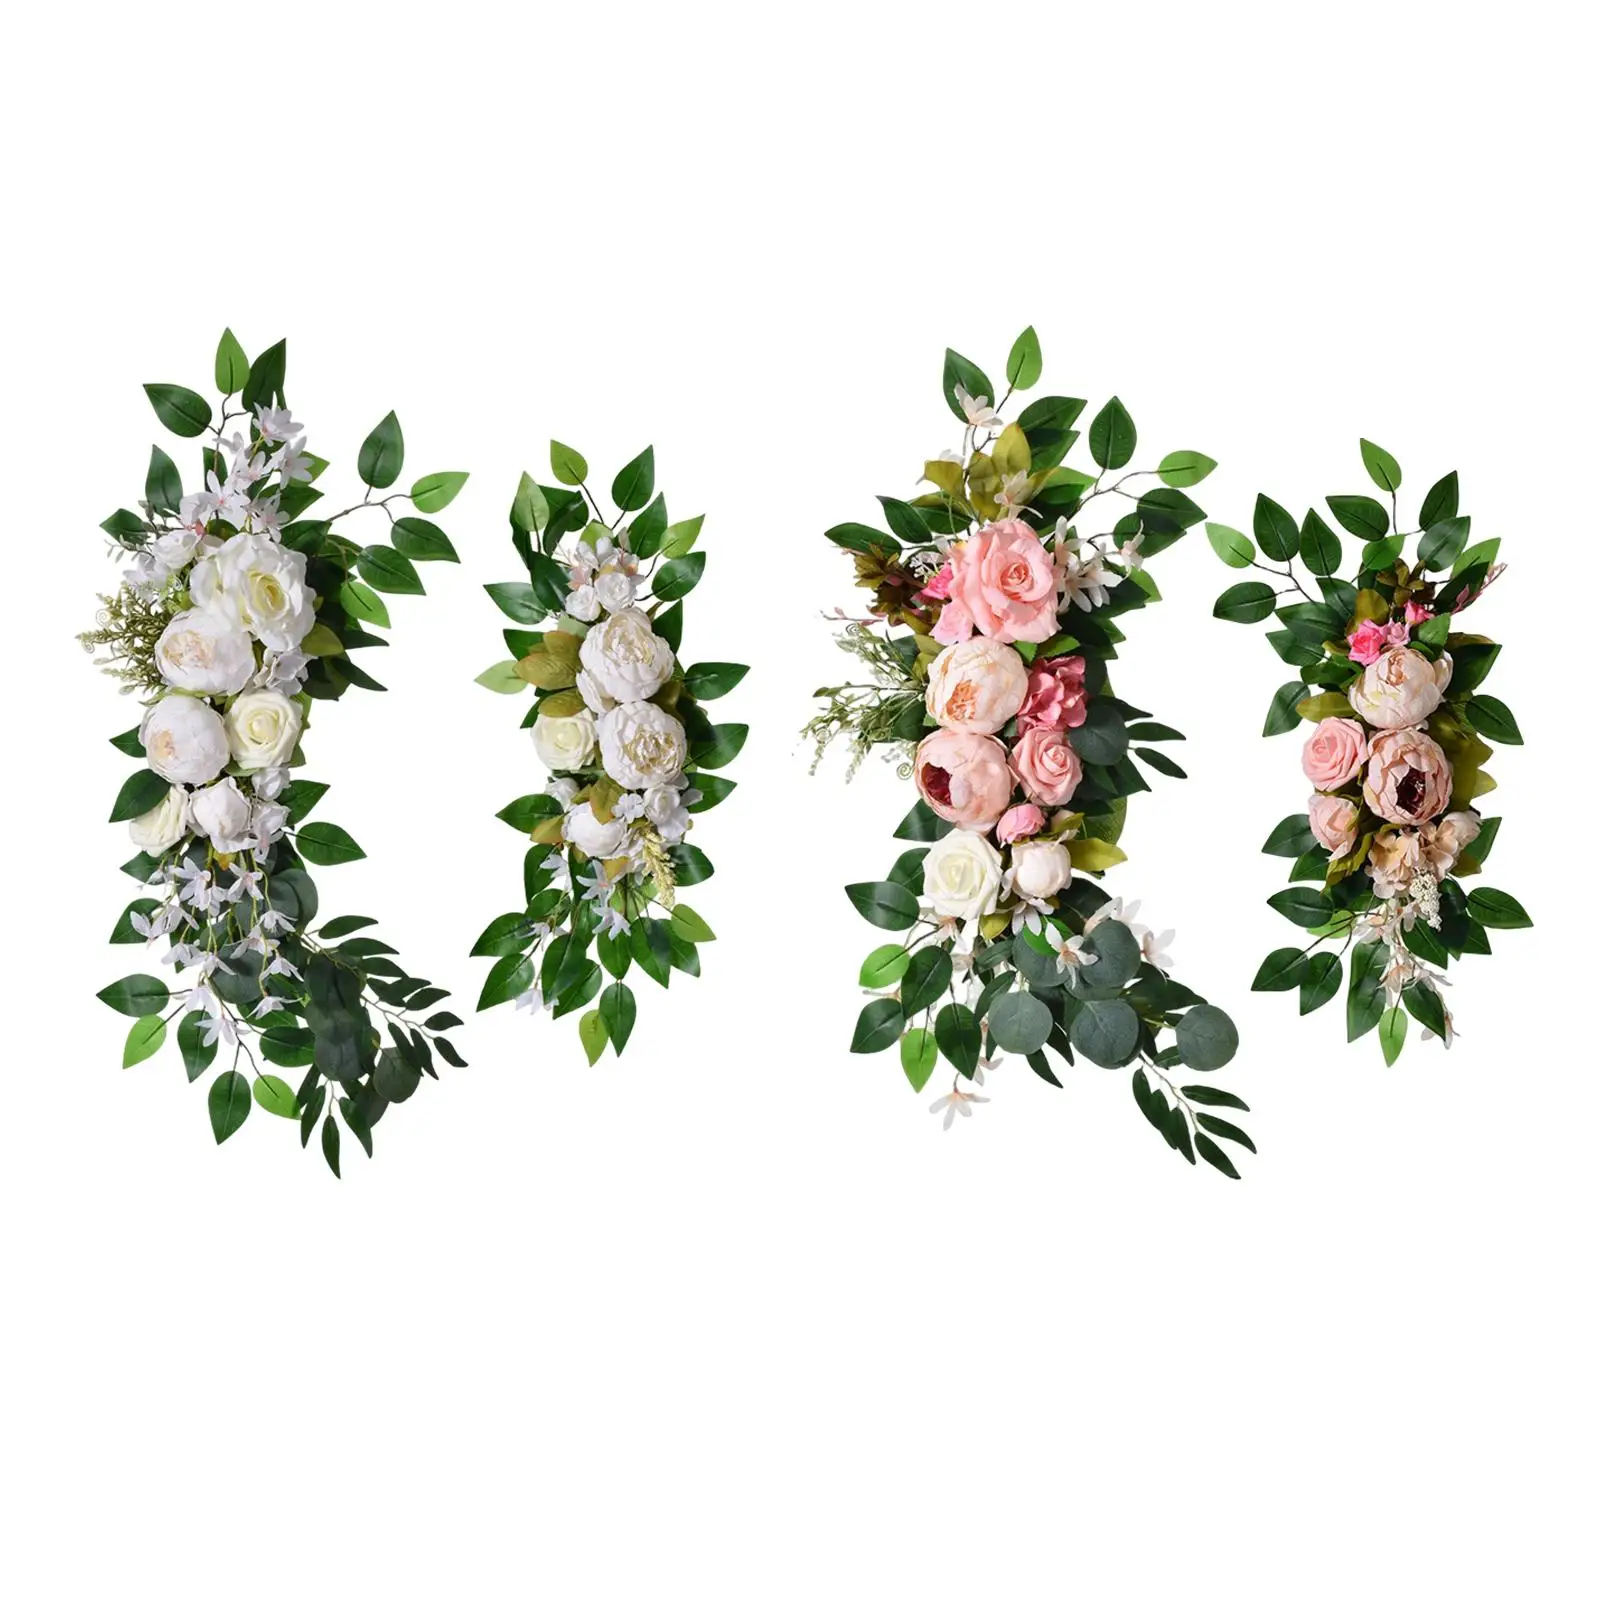 2 Pieces Handmade Wedding Arch Flower Decorative Arch Floral Arrangement for Table